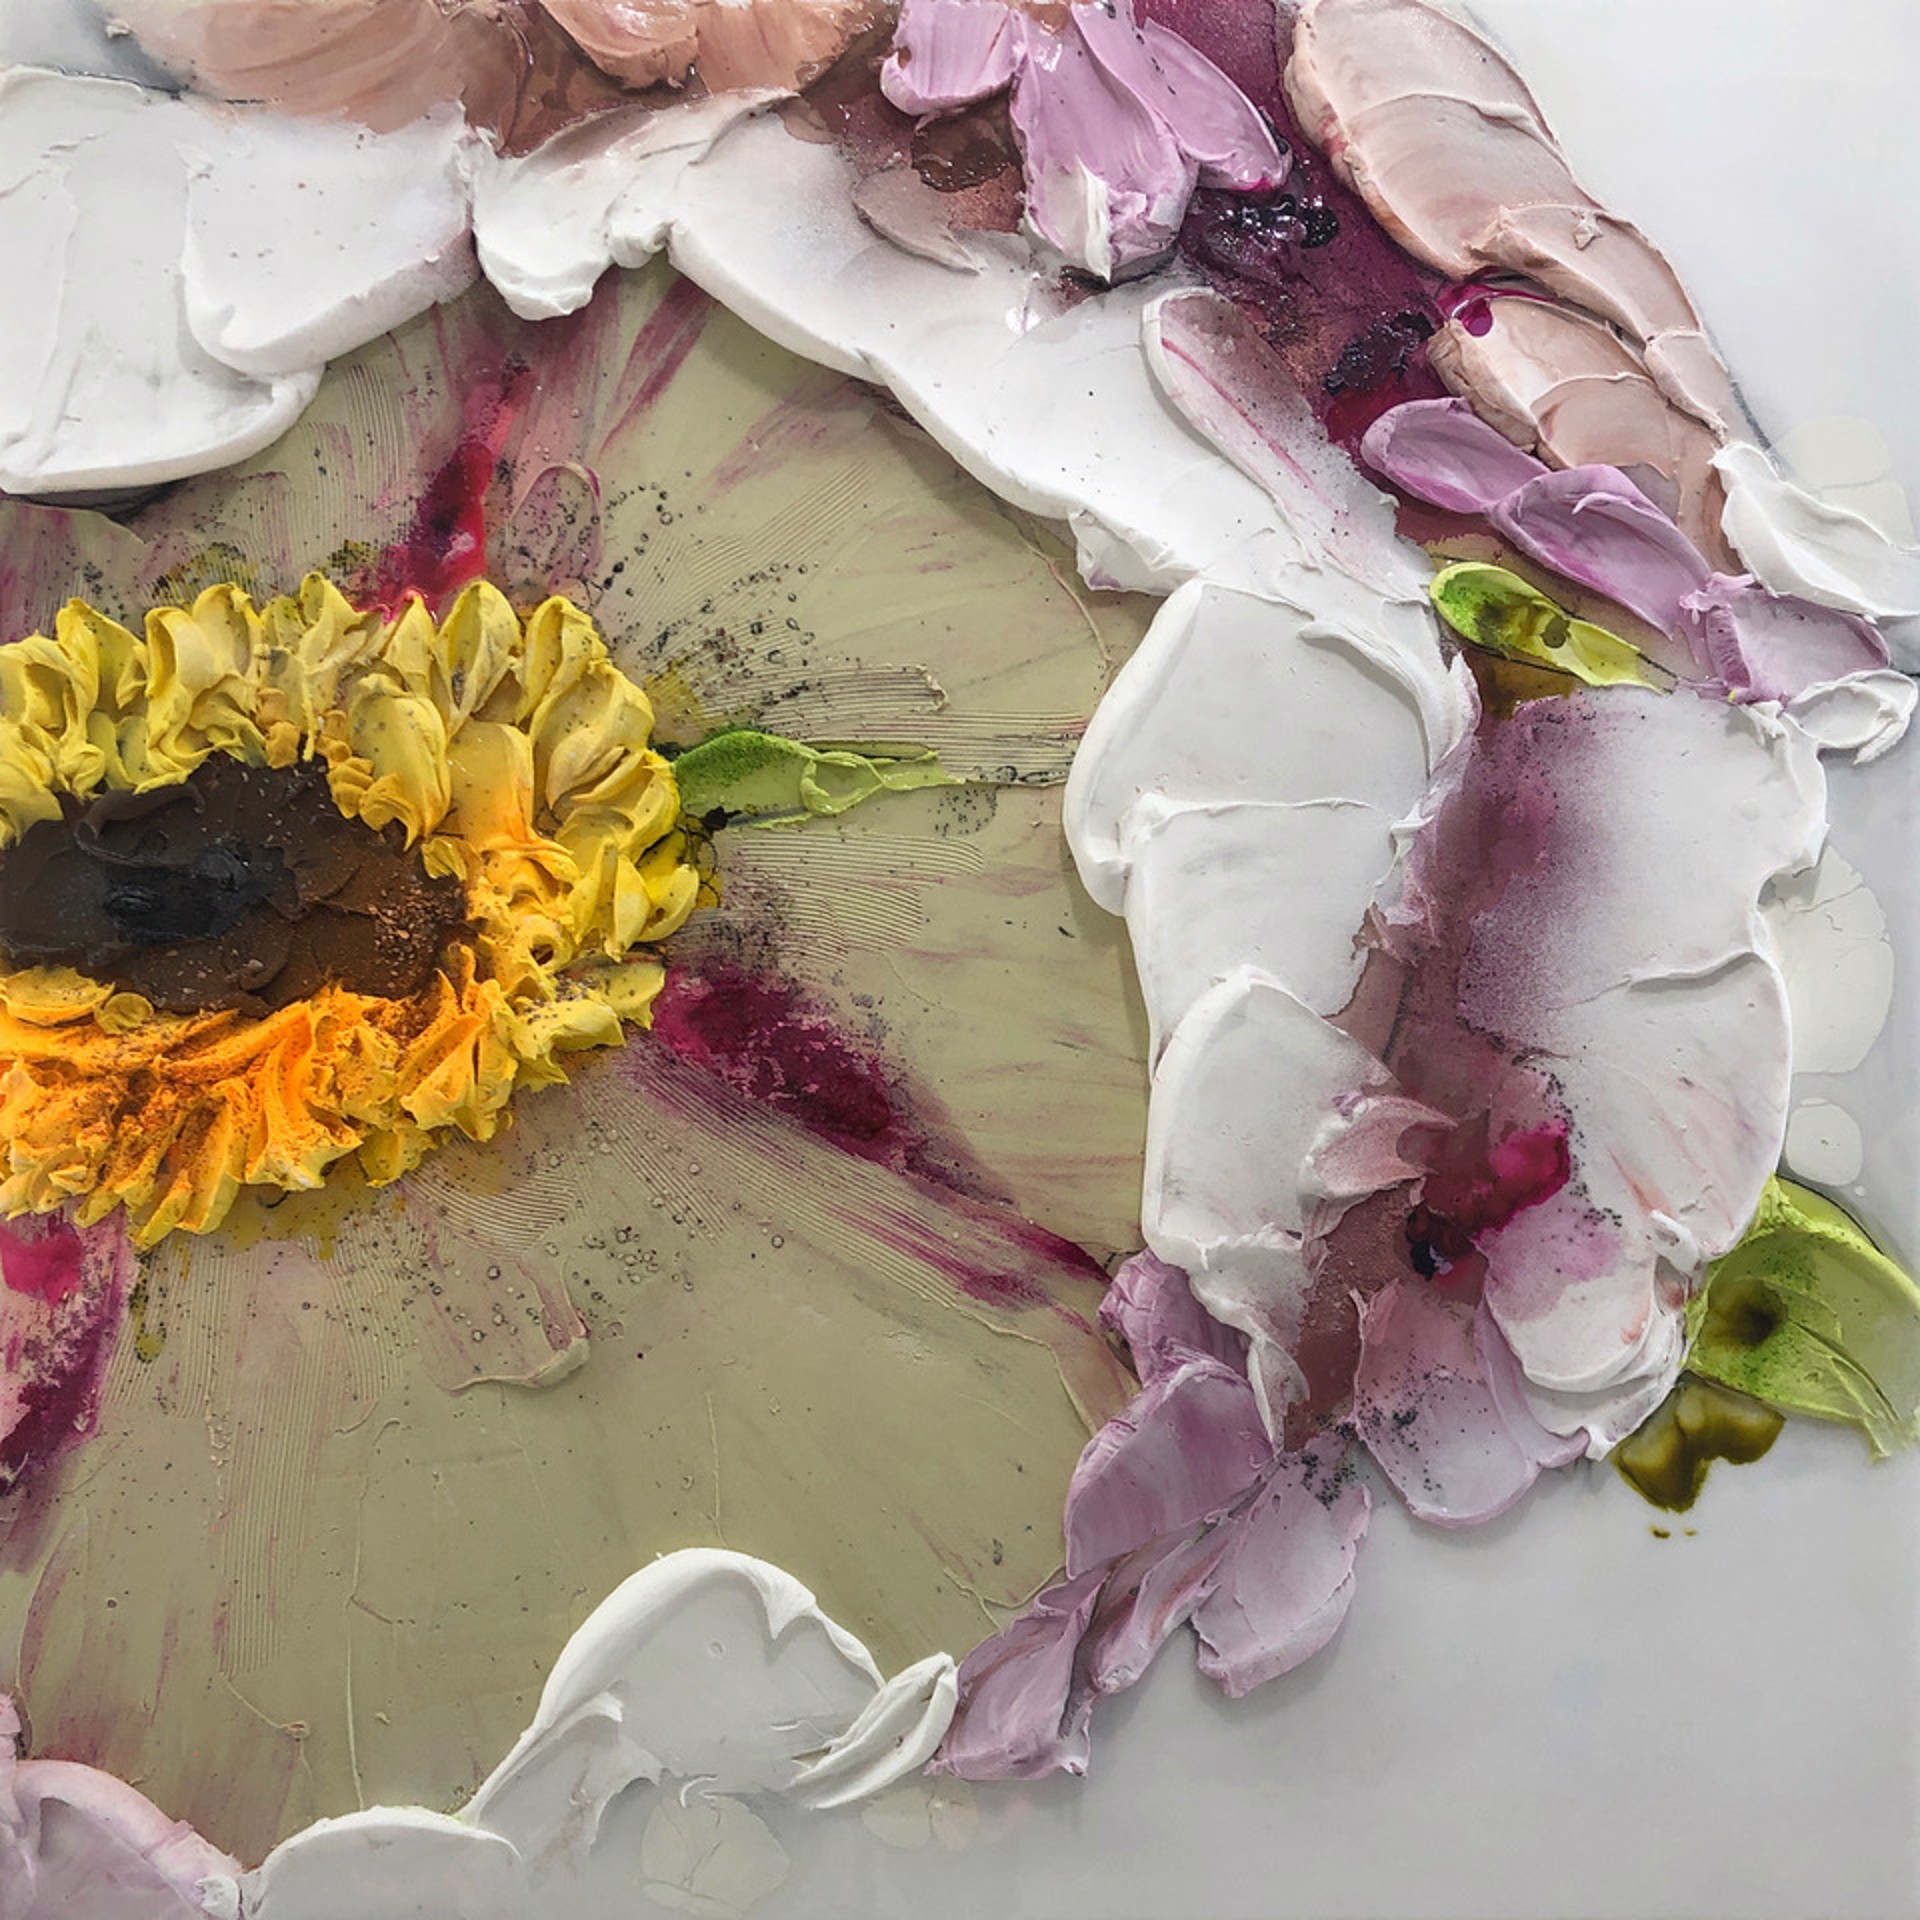 From Flower to Flower #4 by Nicoletta Belletti